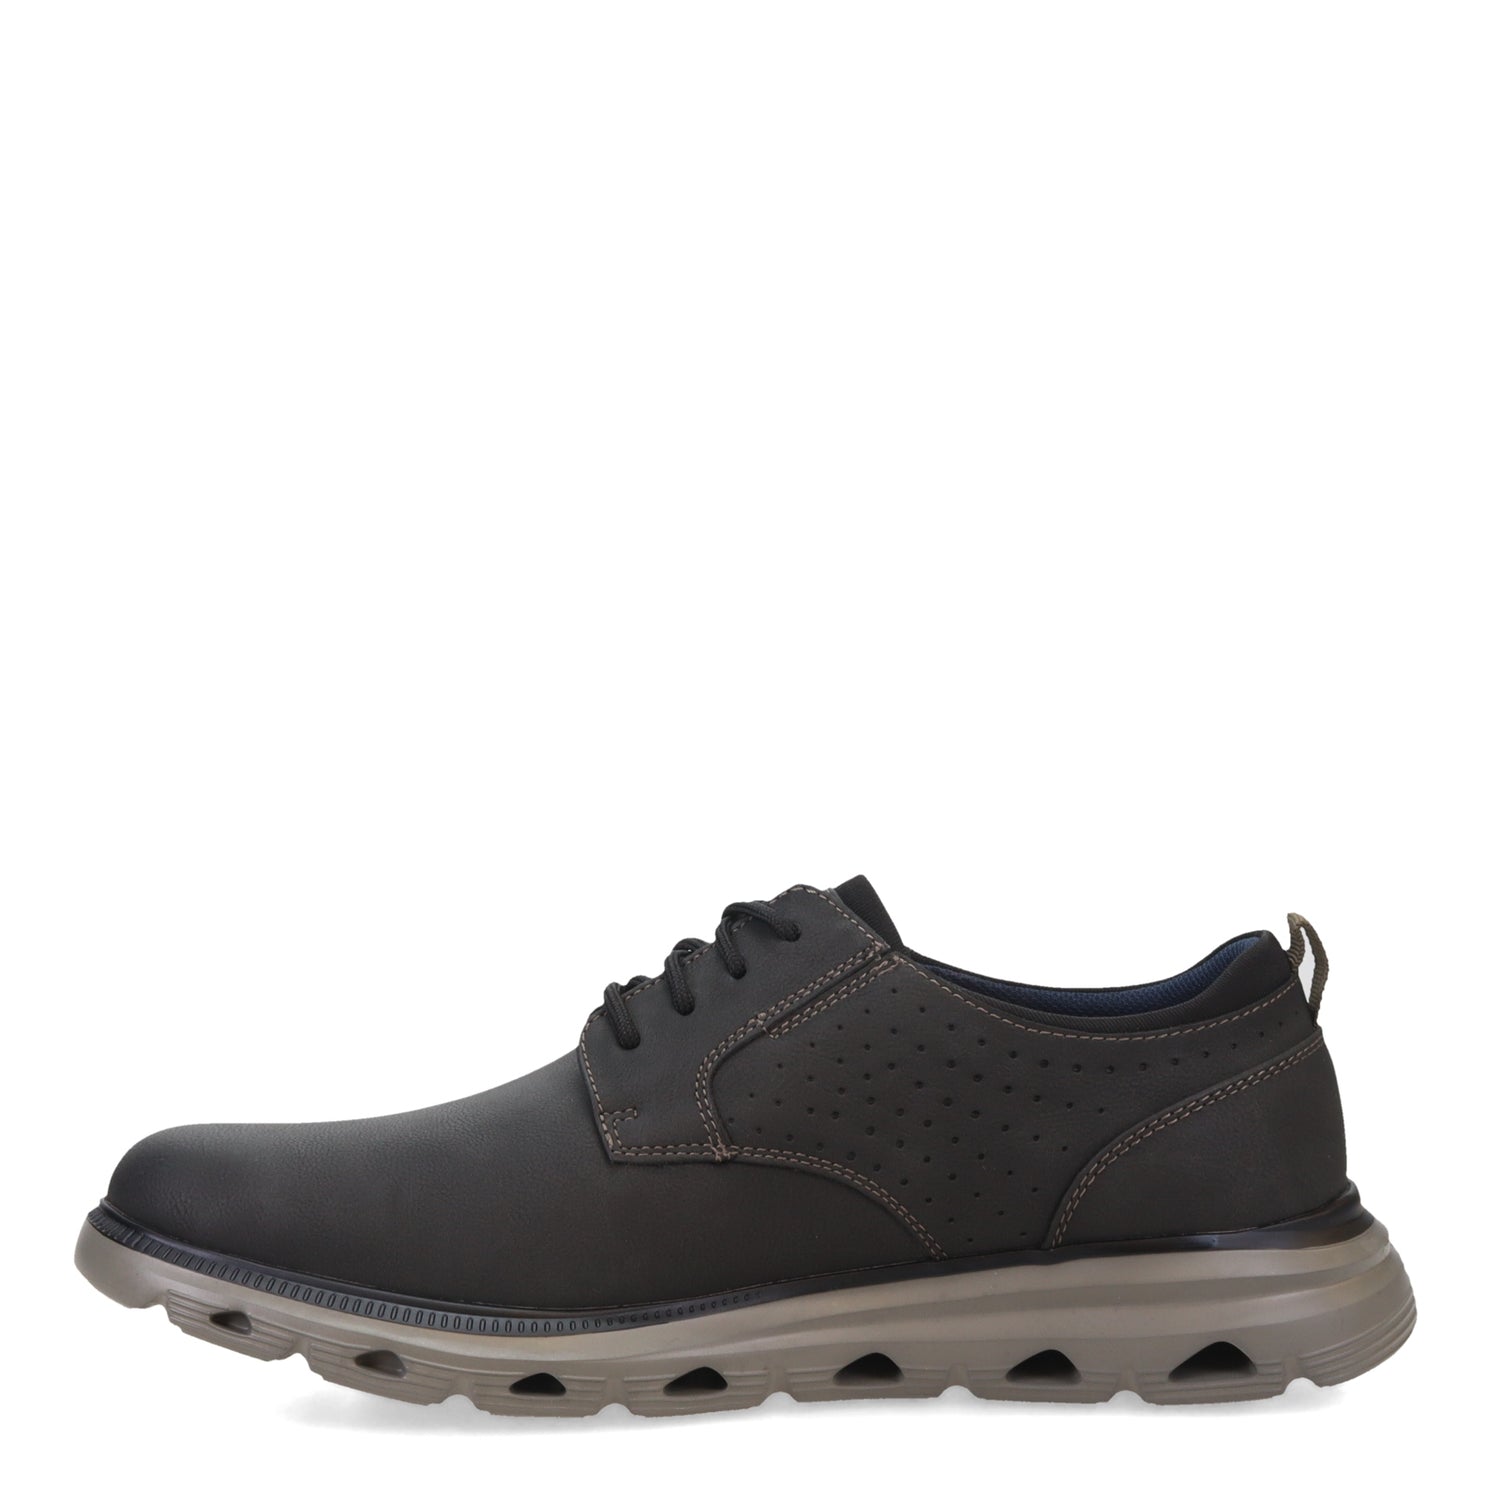 Peltz Shoes  Men's Dockers Finley Oxford BLACK GREY 90-35604